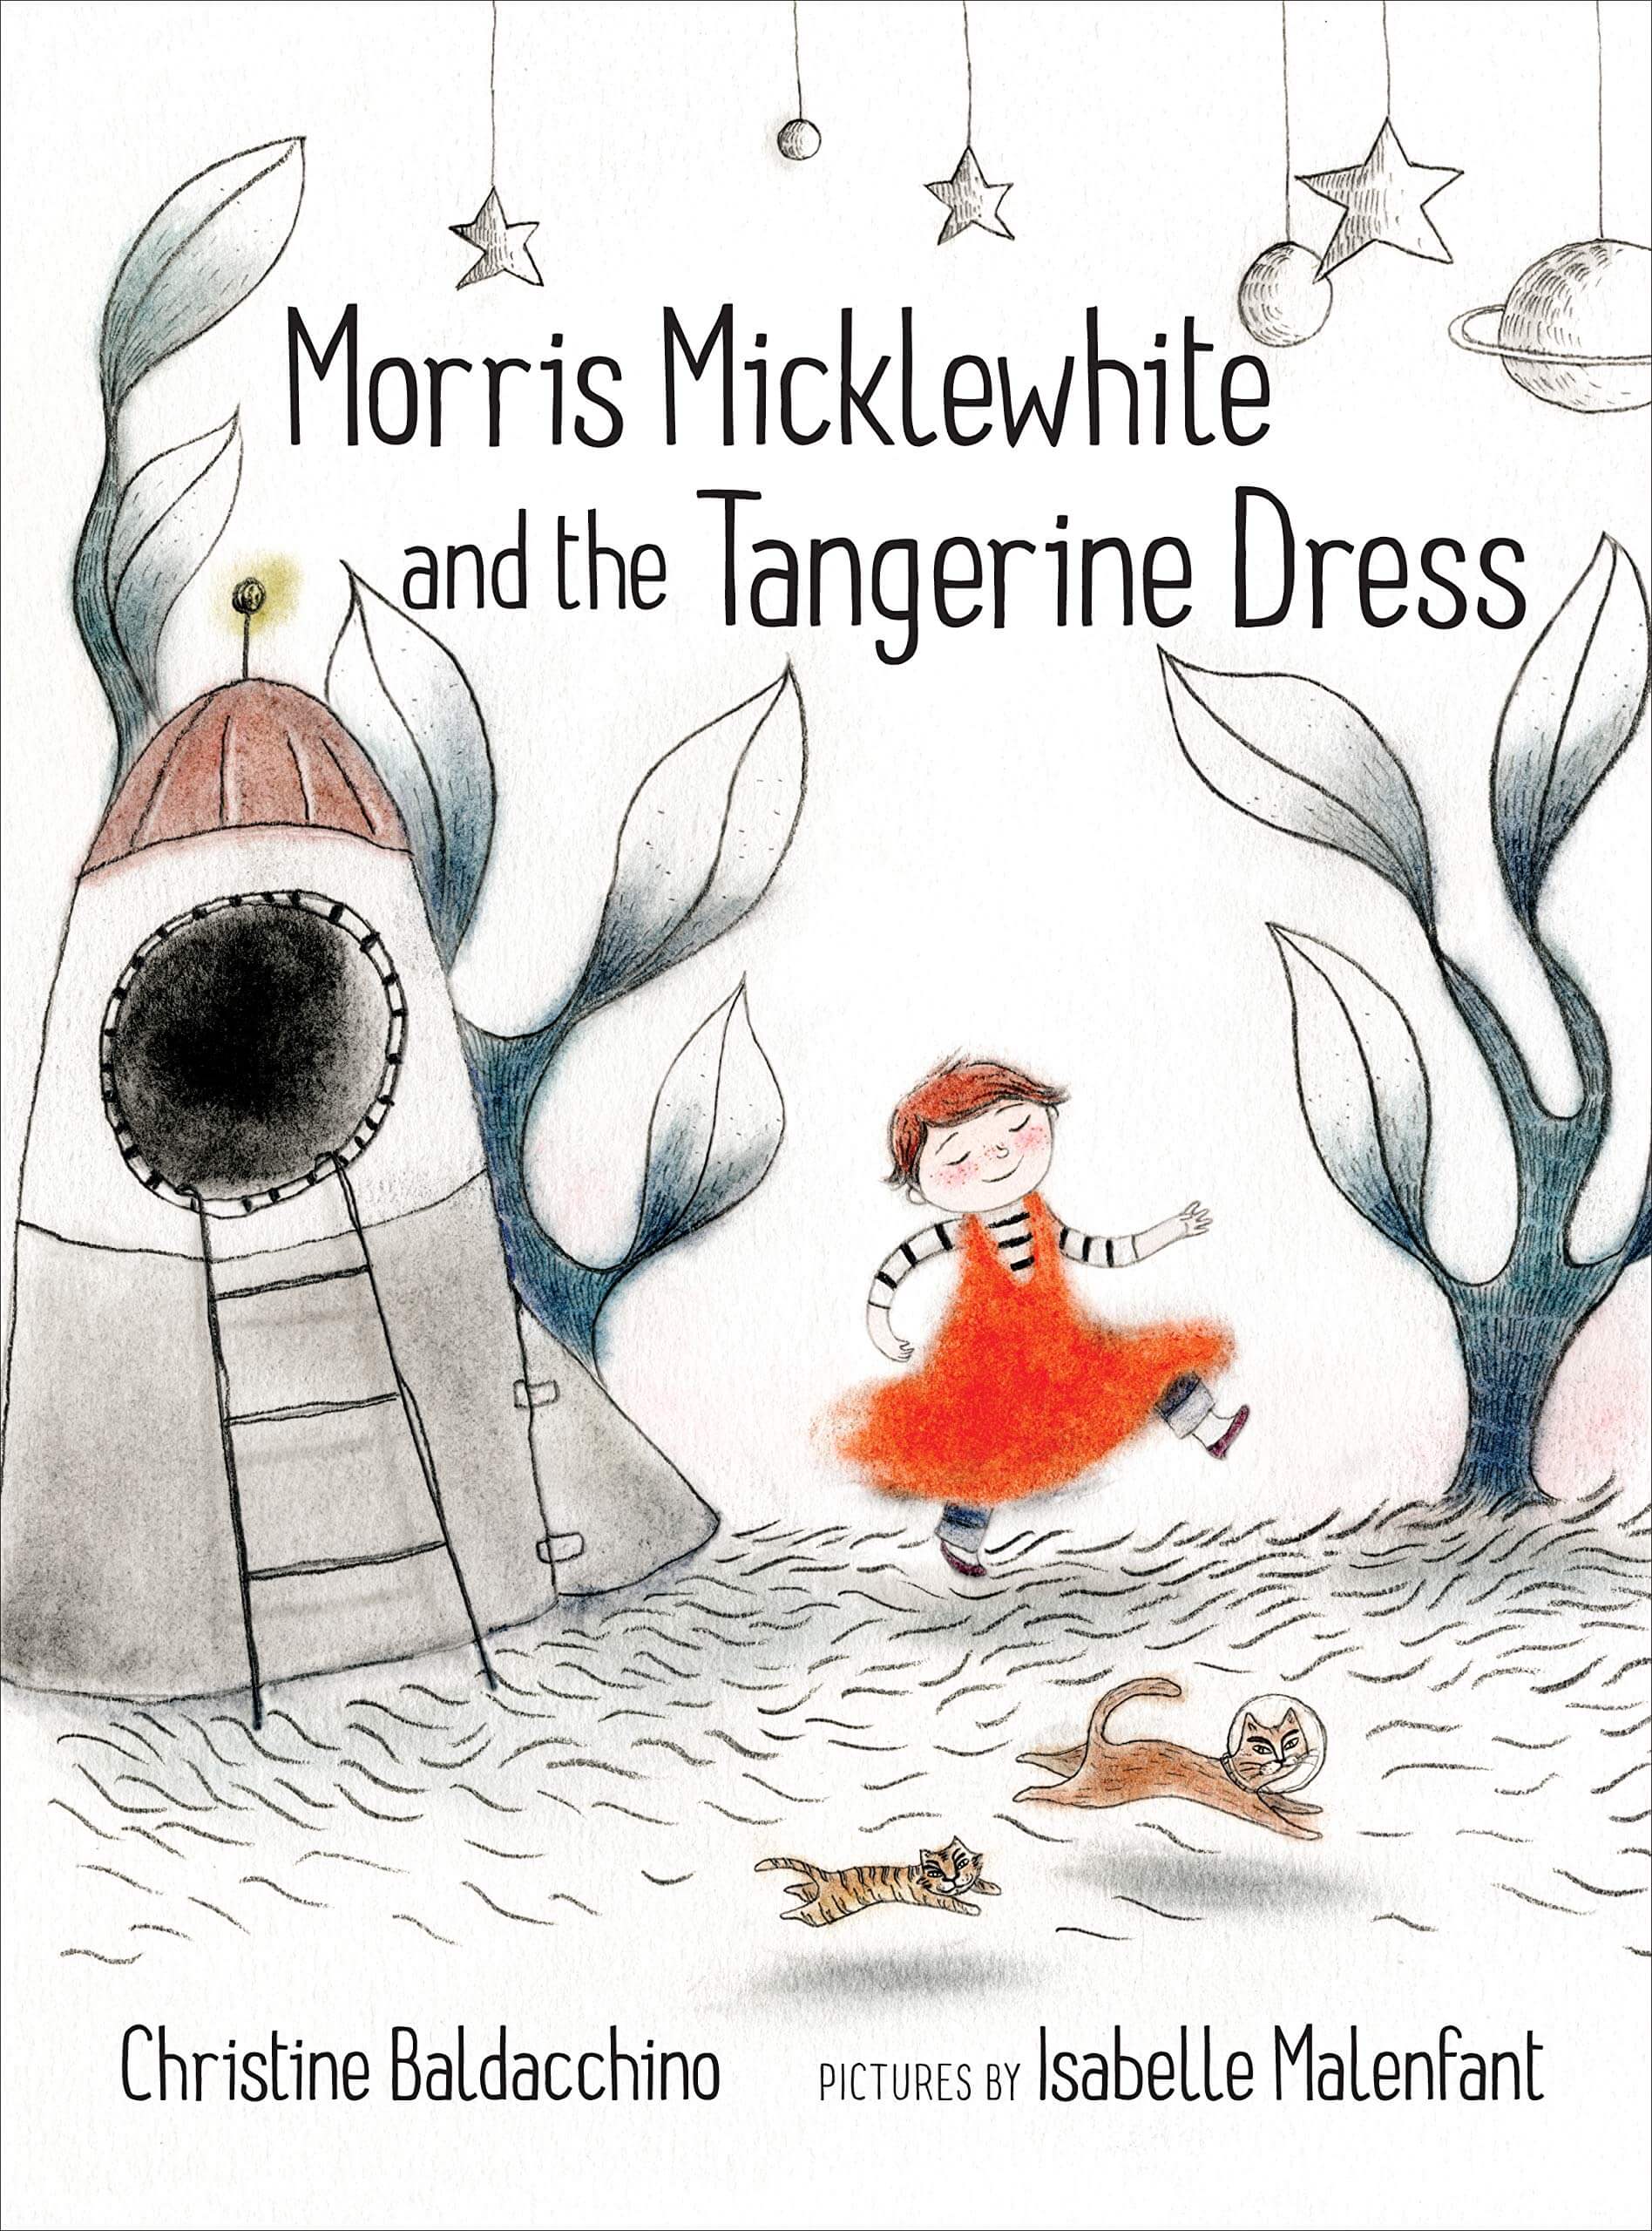 Morris Micklewhite and The Tangerine Dress by Christine Baldacchino